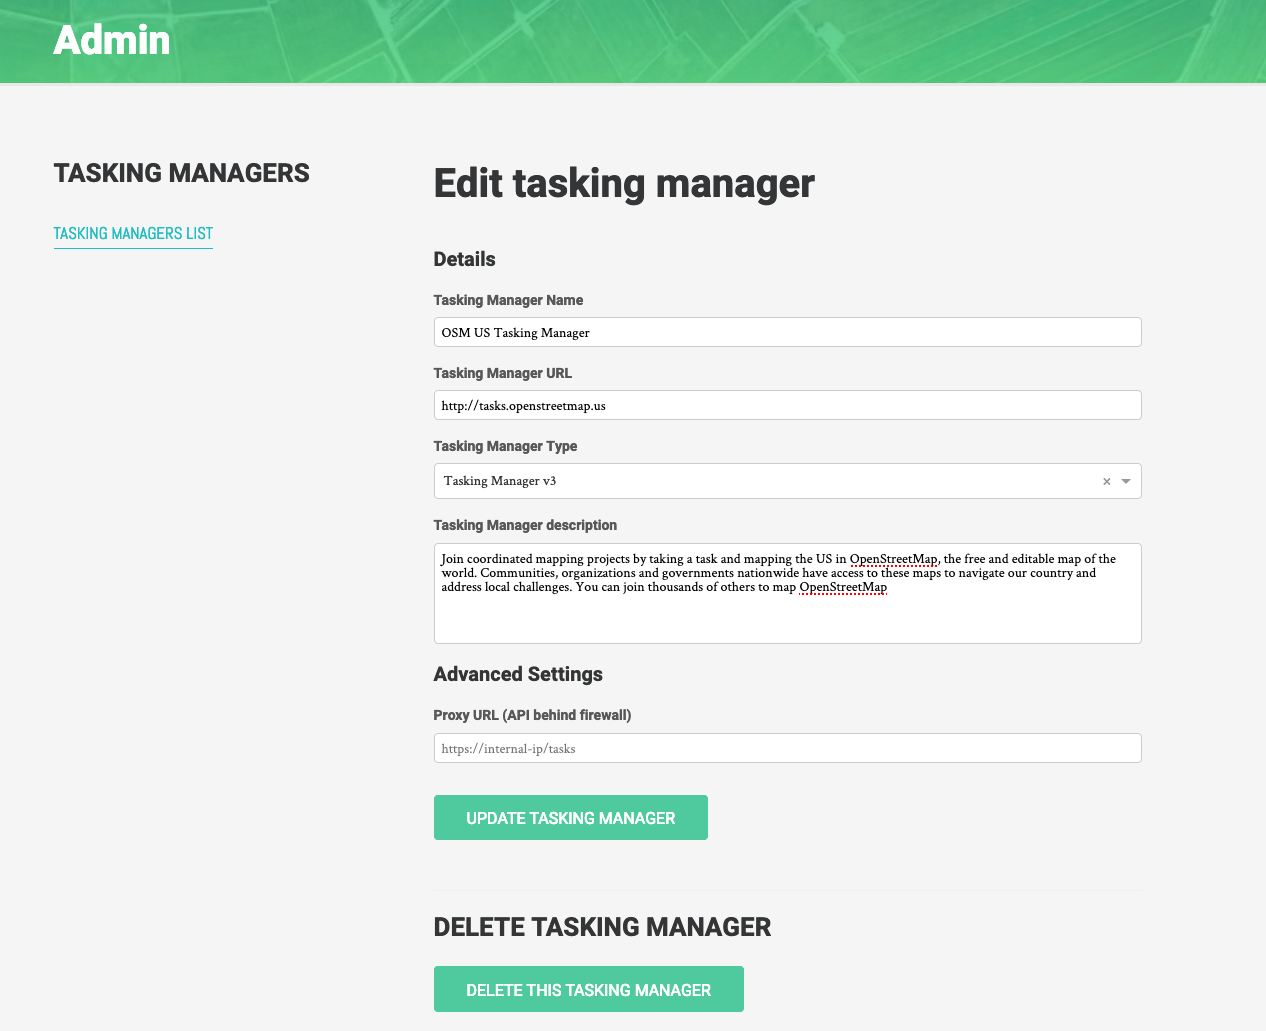 Editing Tasking Manager Details